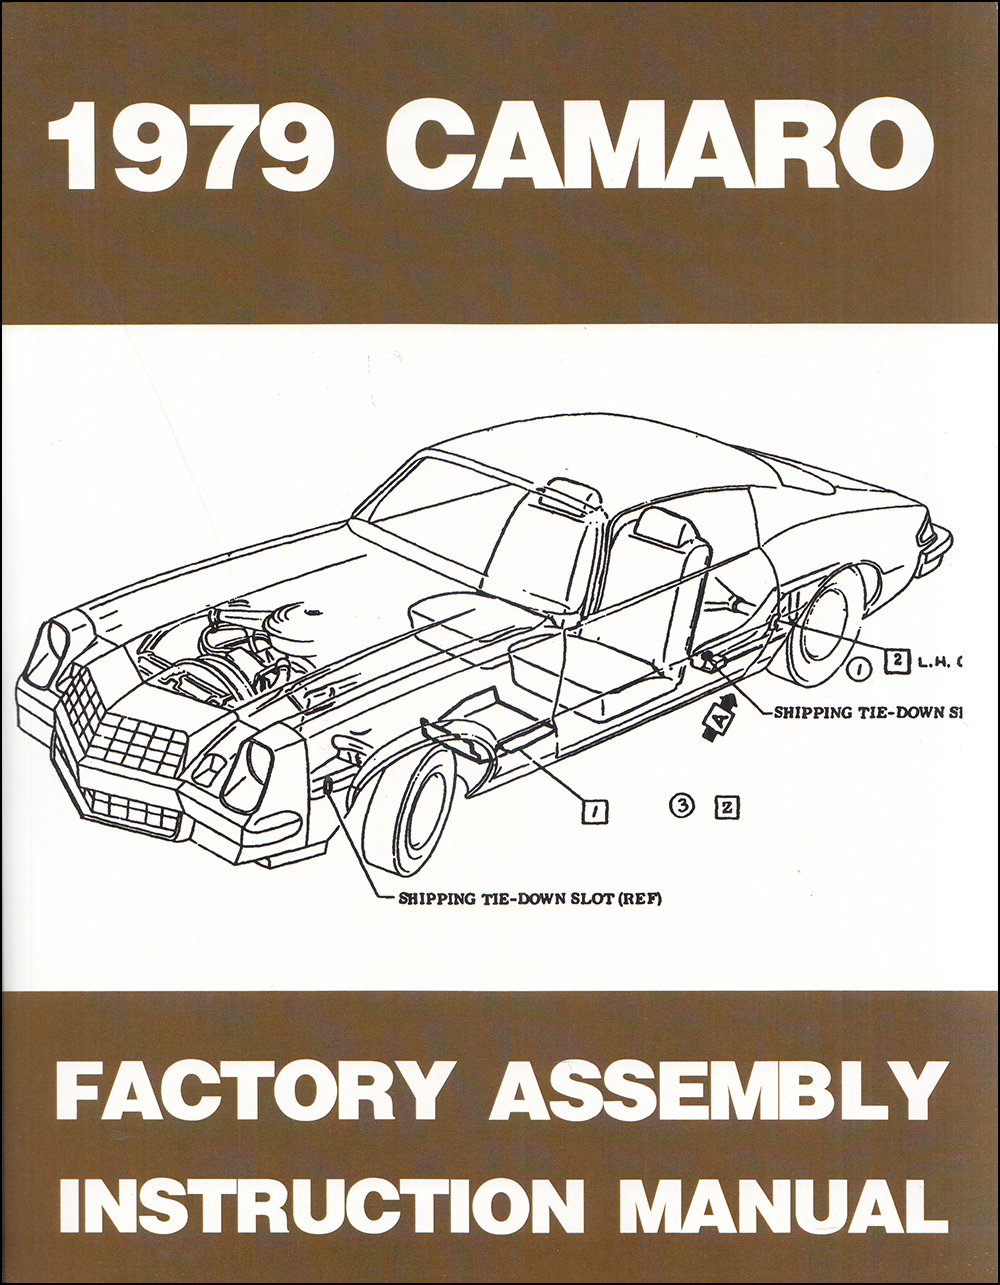 1979 Camaro Factory Assembly Manual Reprint Bound